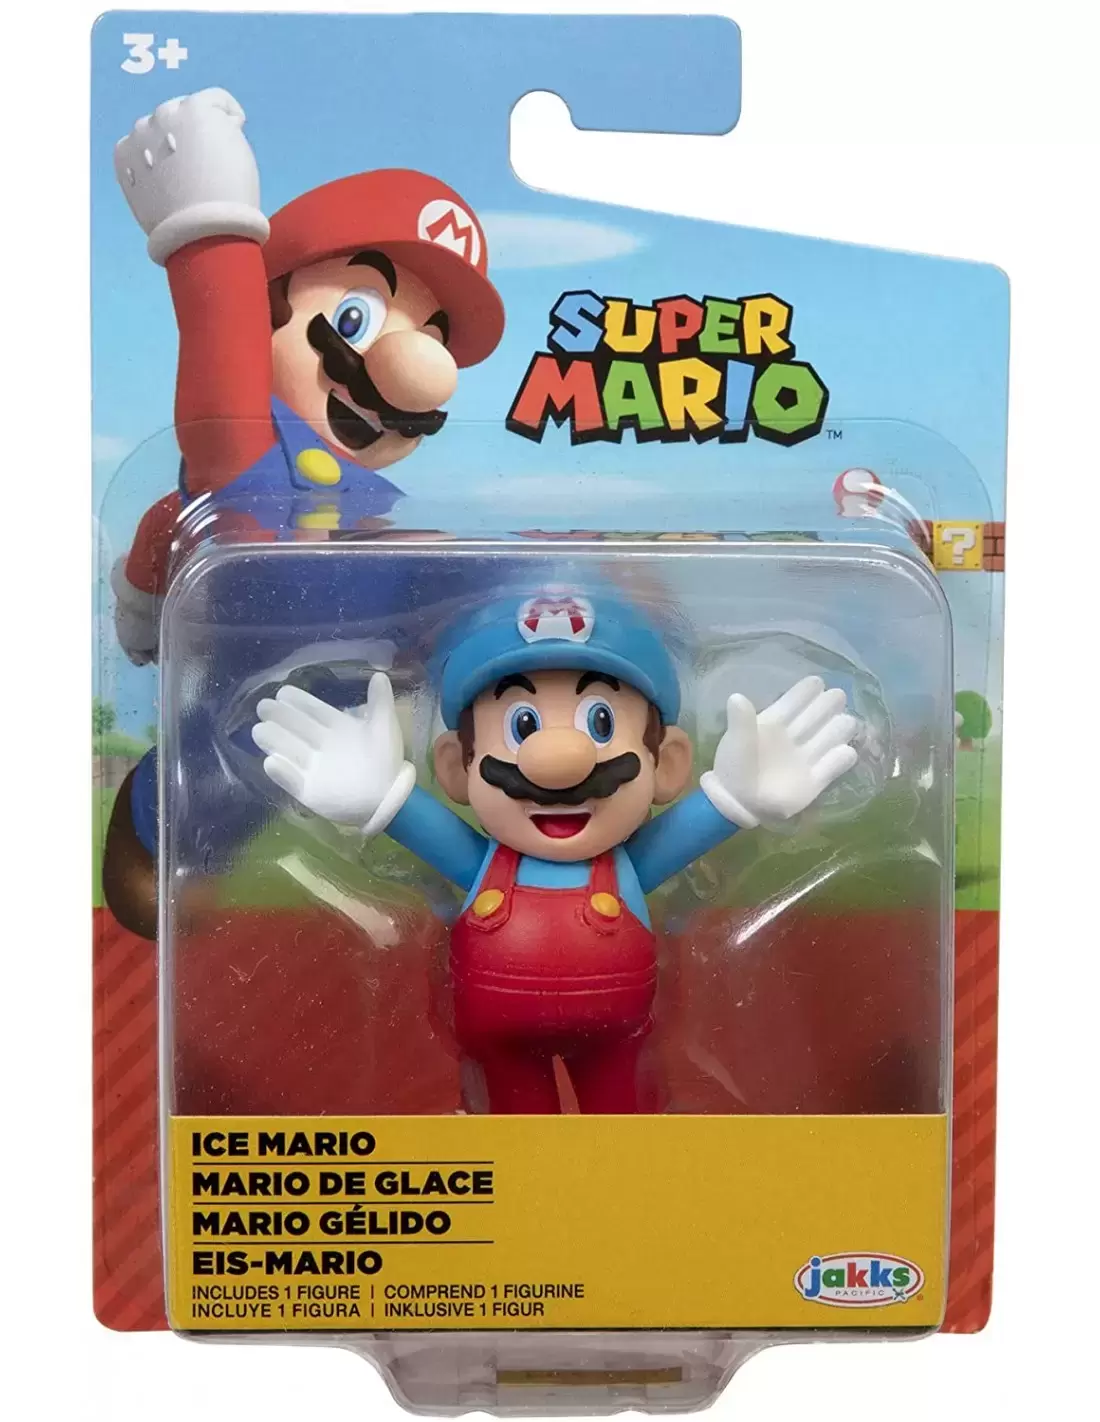 World of Nintendo - Ice Mario